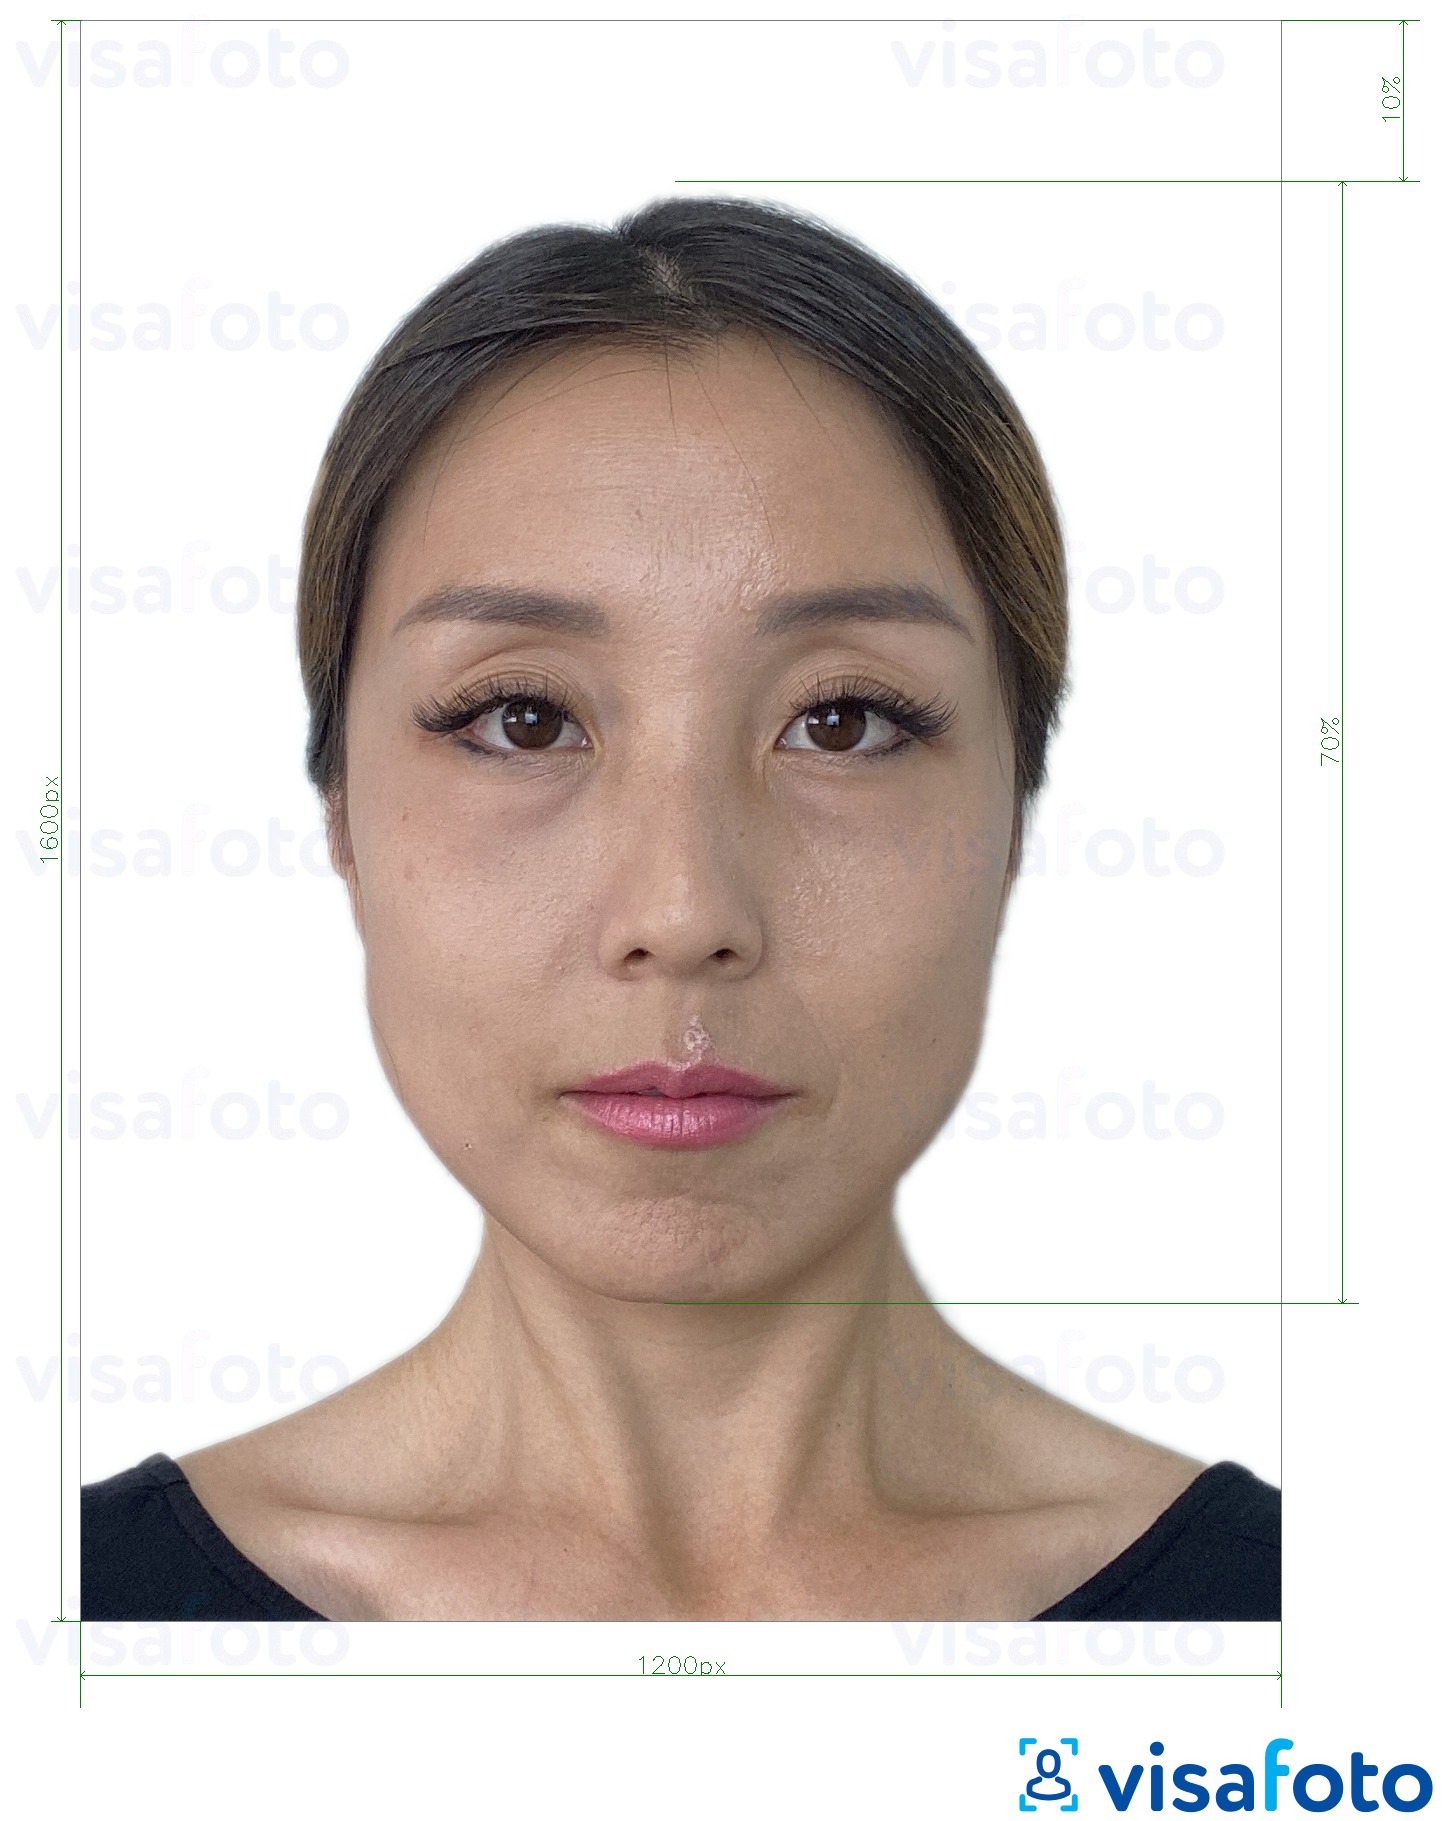 Ejemplo de foto para Hong Kong en línea e-pasaporte 1200x1600 píxeles con la especificación del tamaño exacto